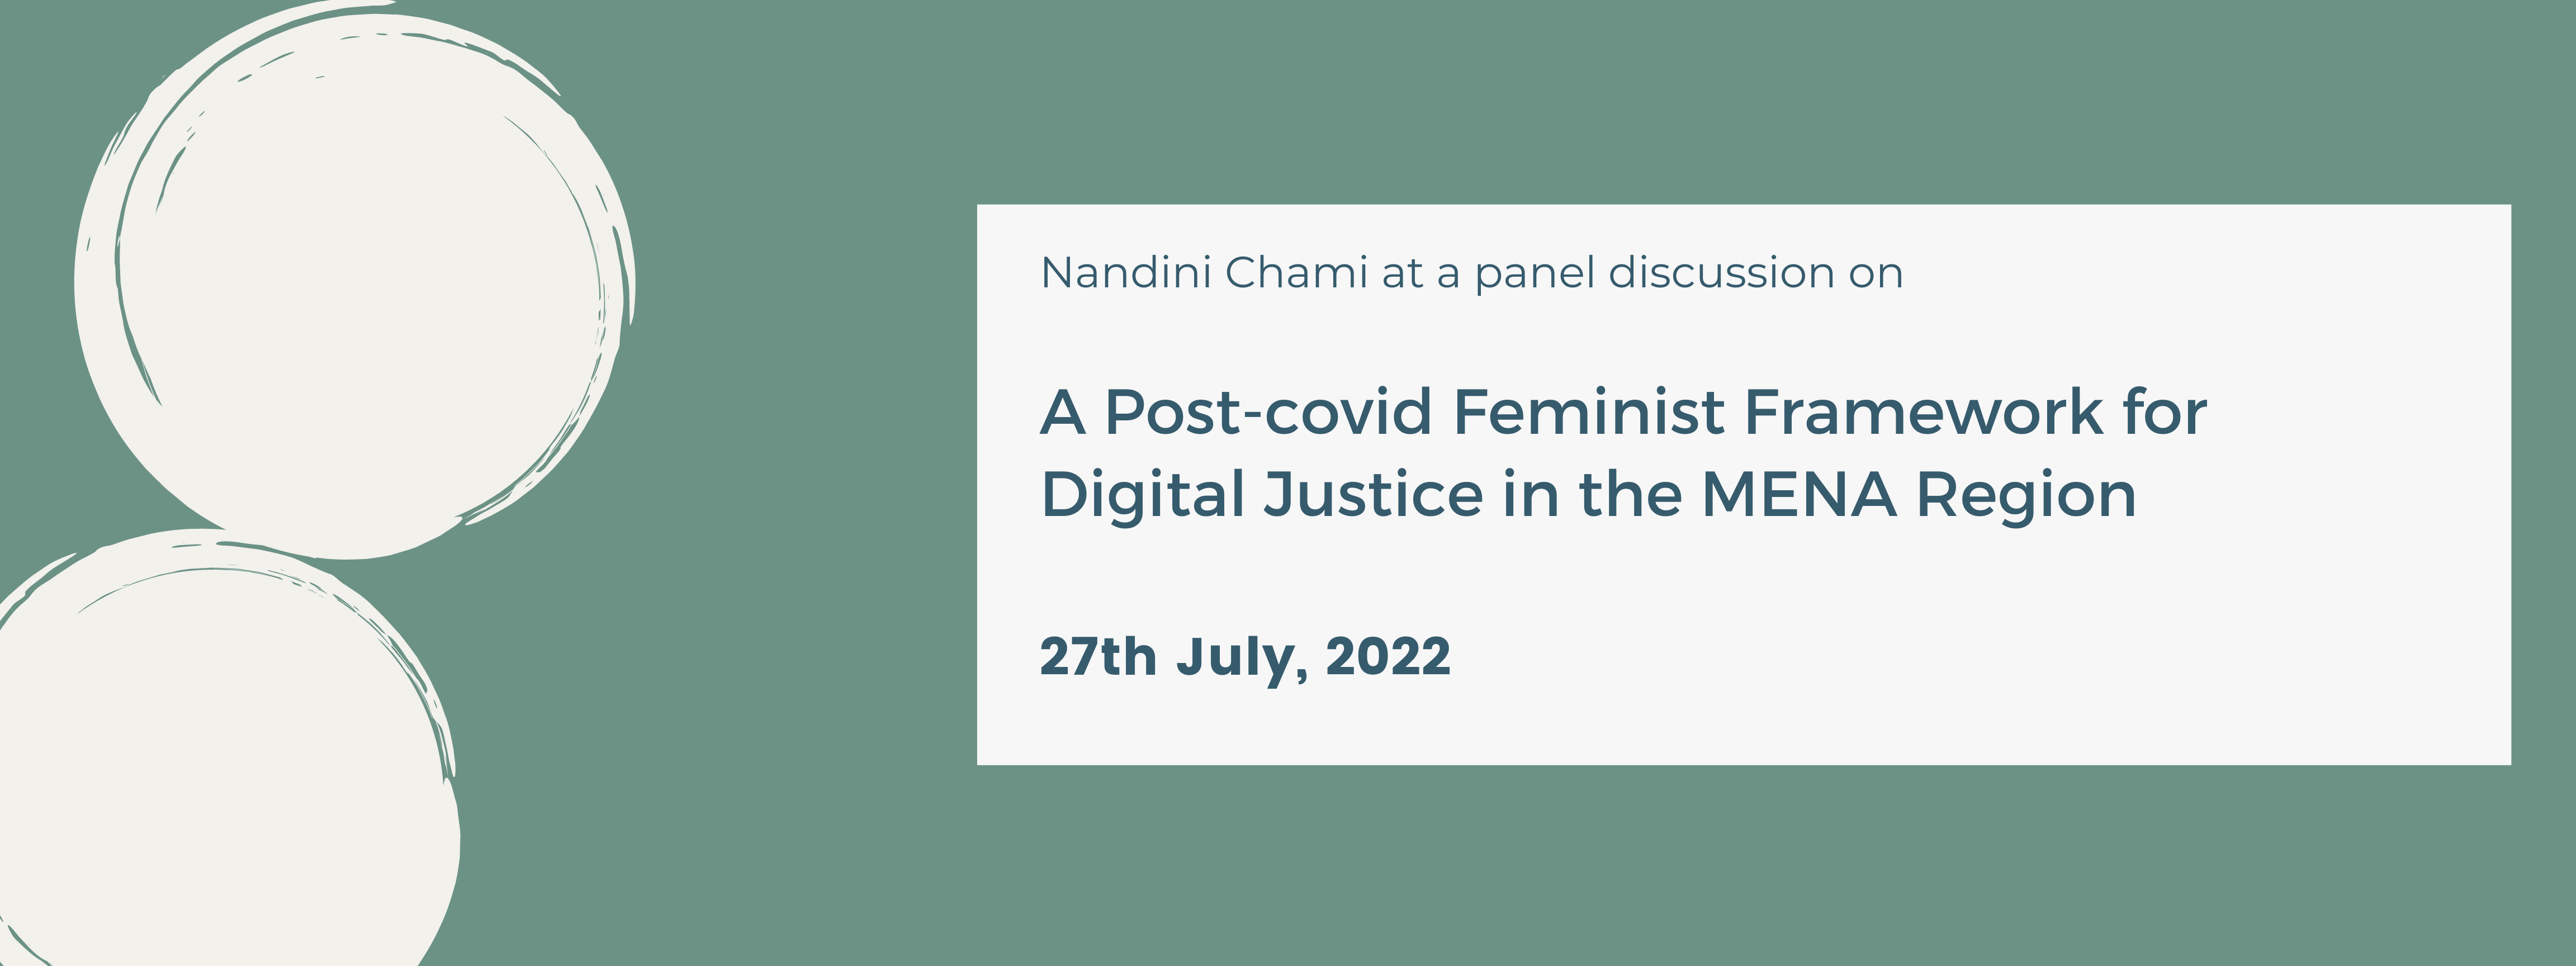 A Post-covid Feminist Framework for Digital Justice in the MENA Region